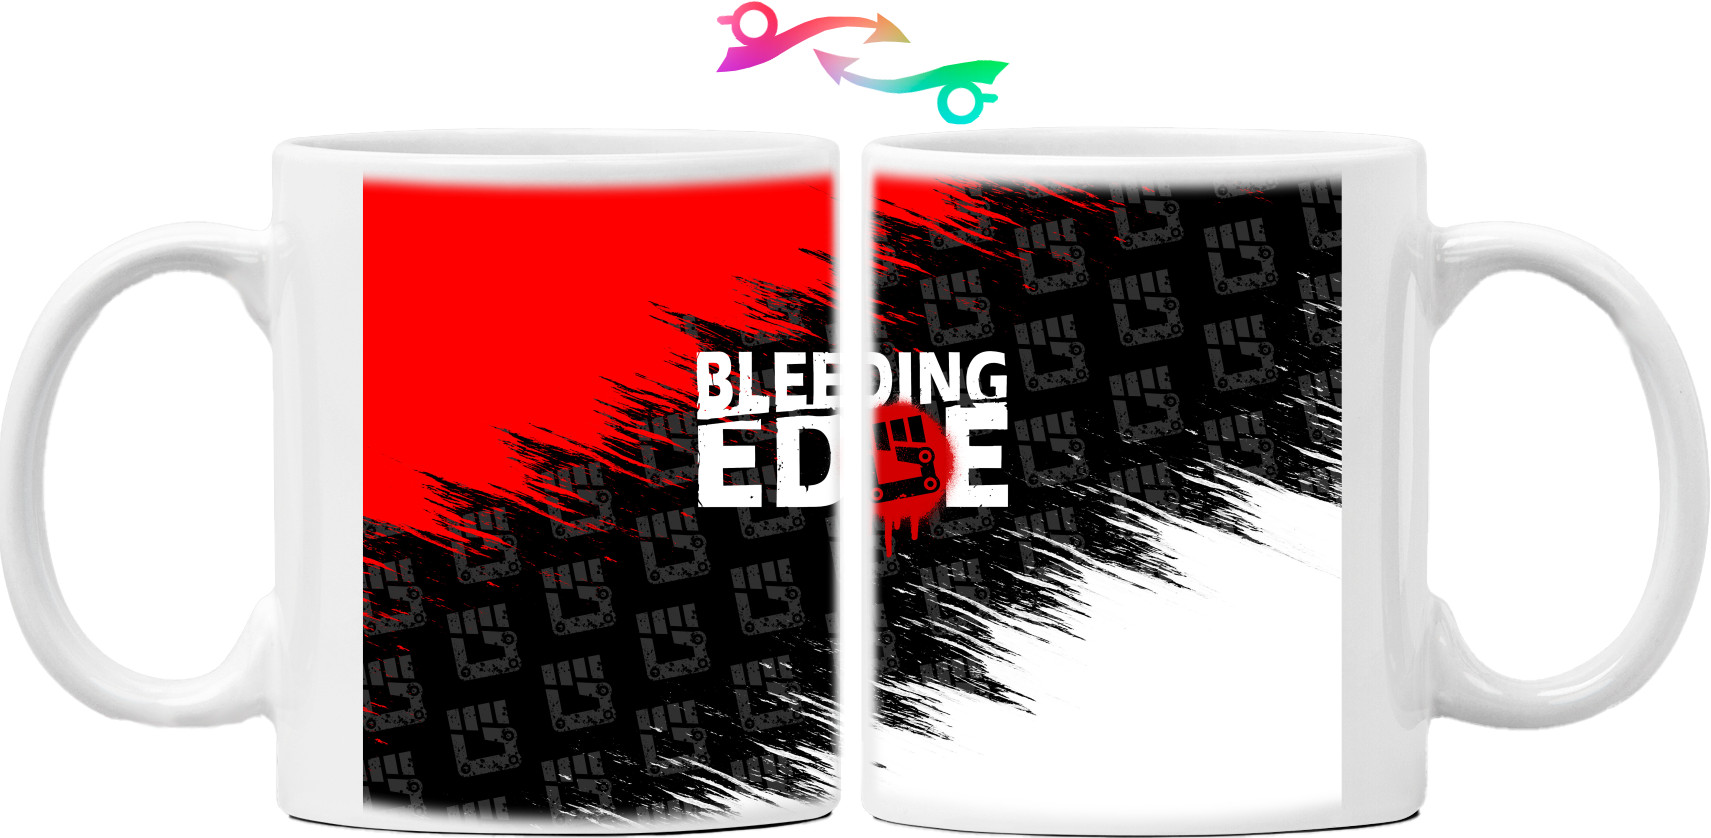 Bleeding Edge [4]